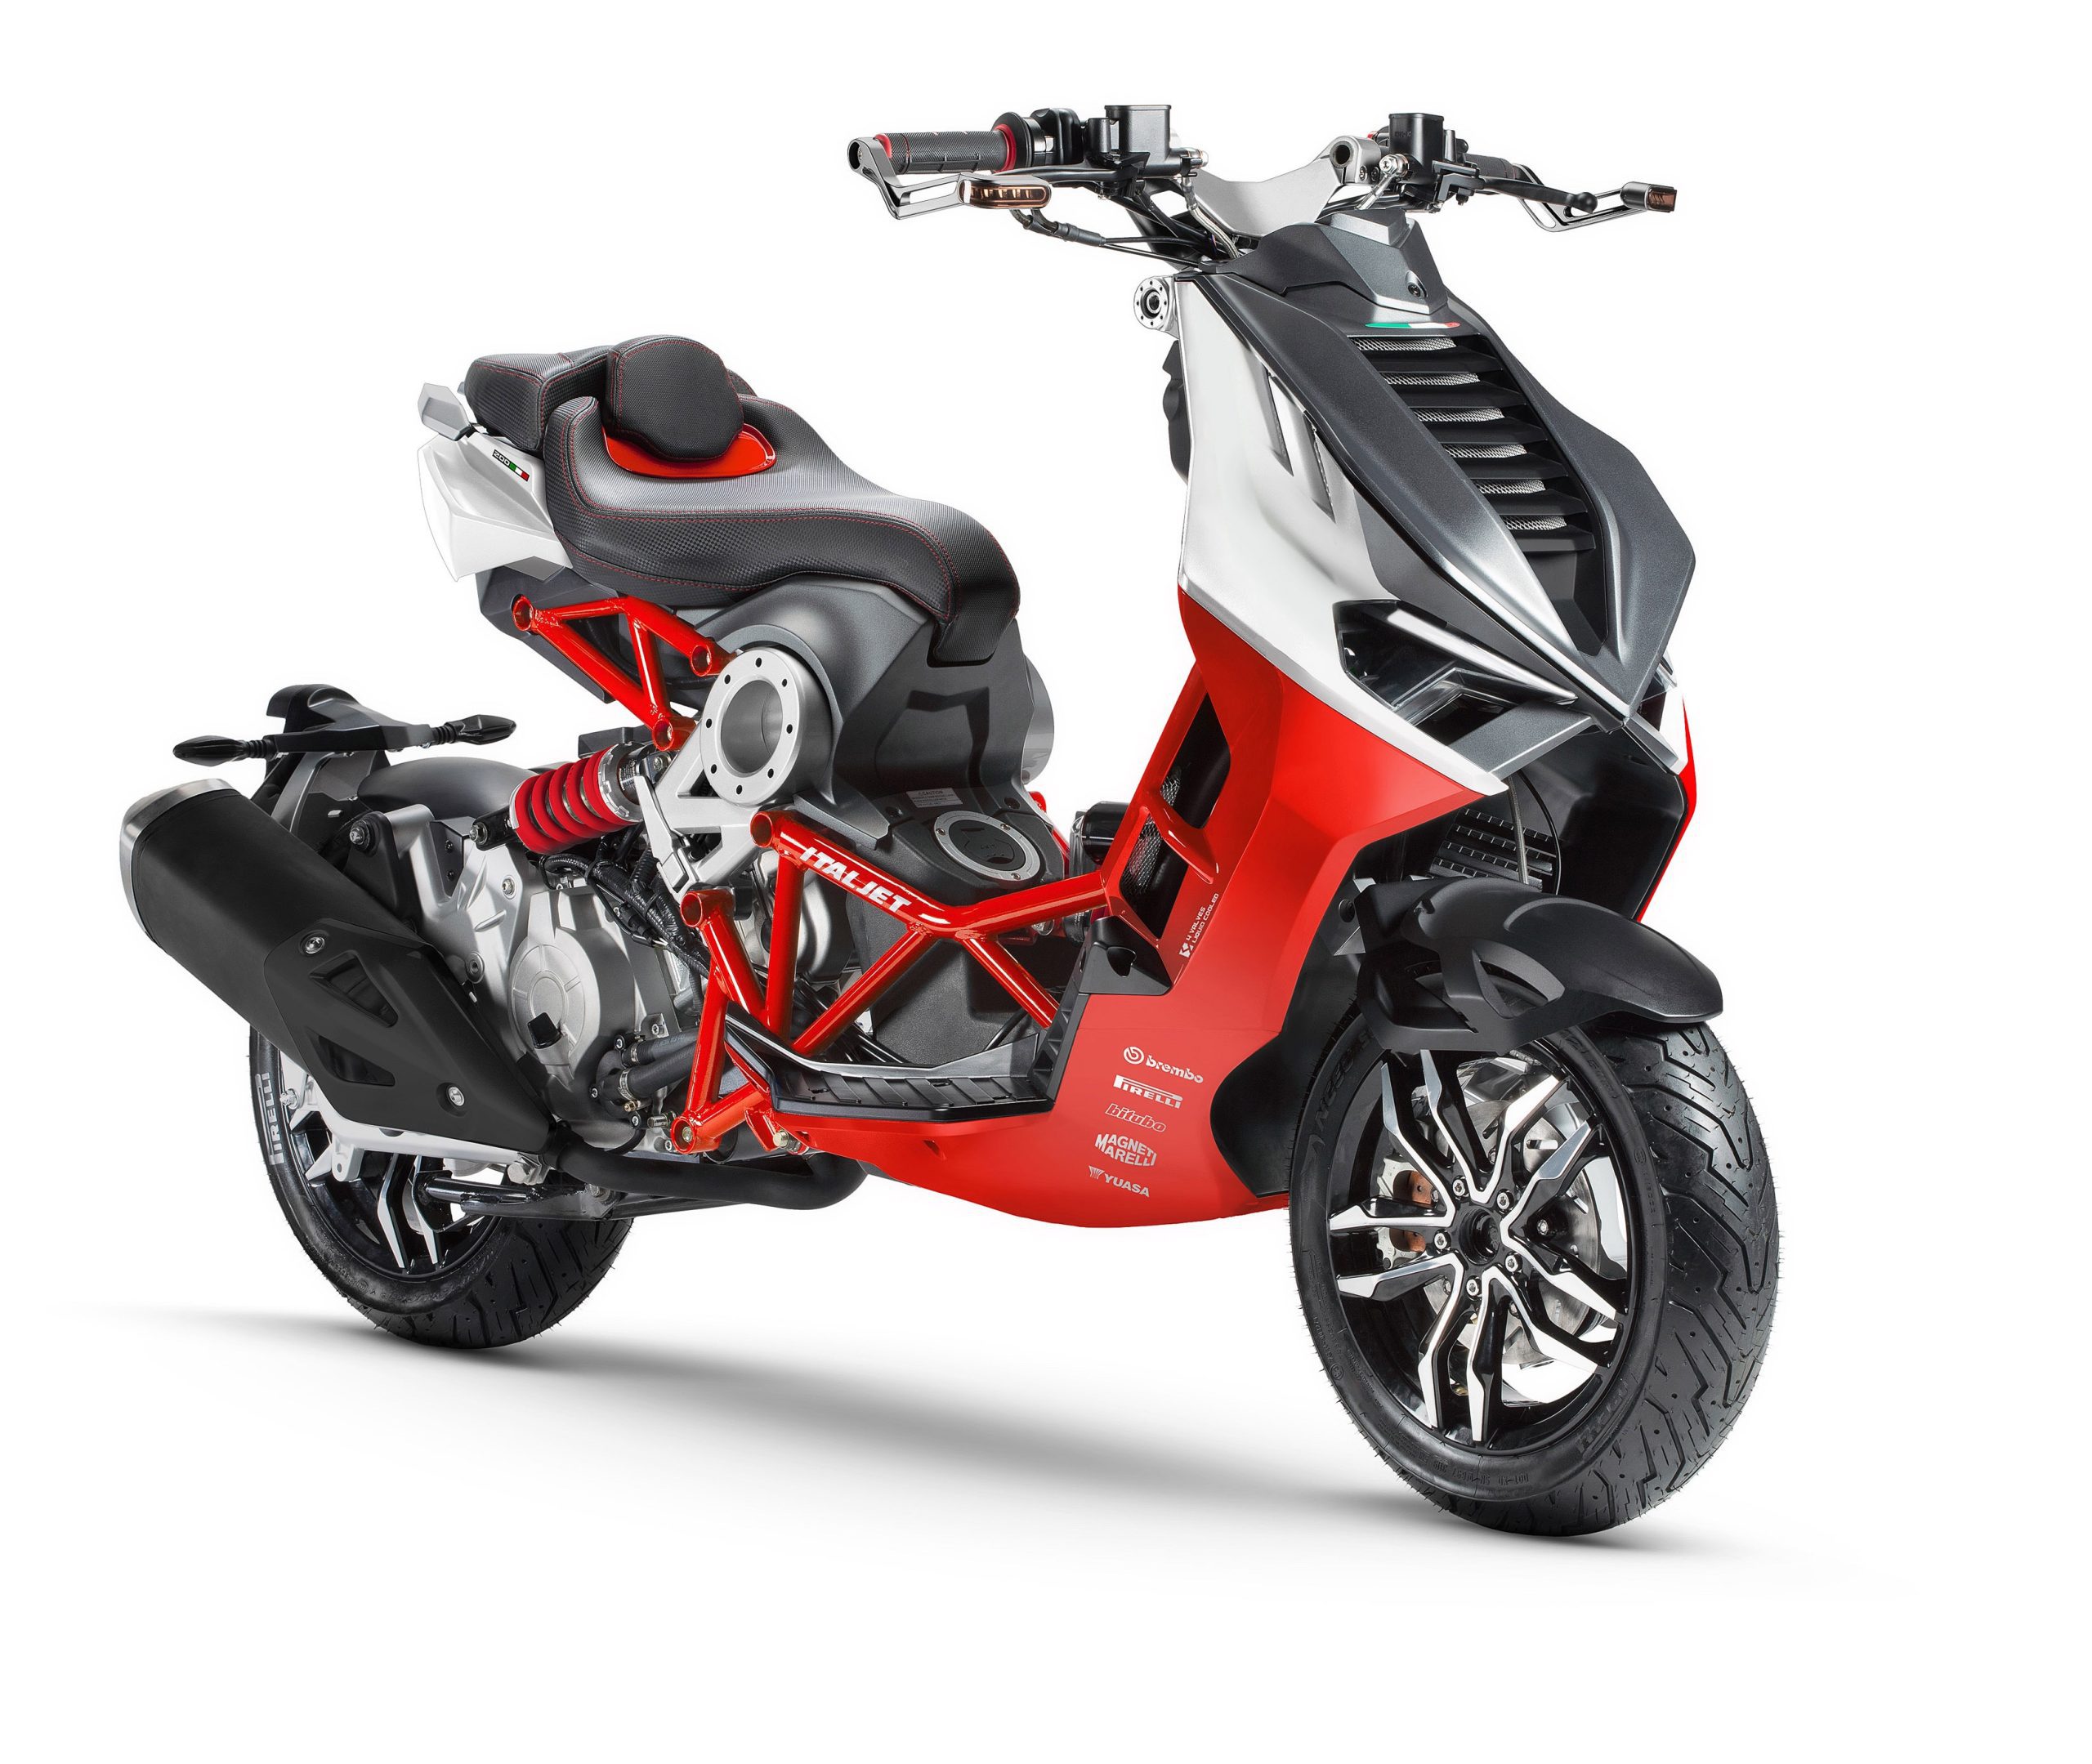 Italjet scooter has Ducati design - webBikeWorld